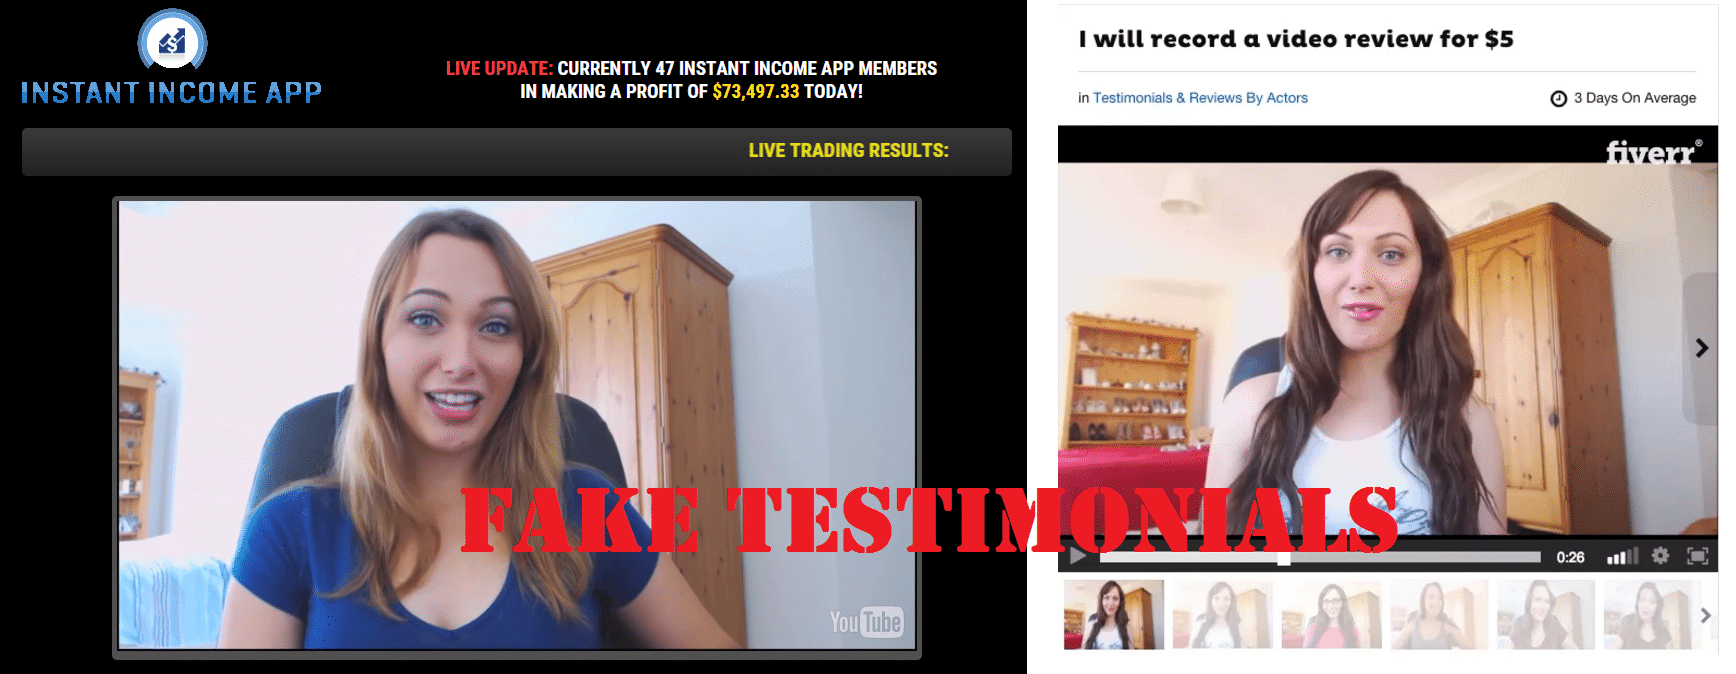 instant-income-app-fake-testimonials-1